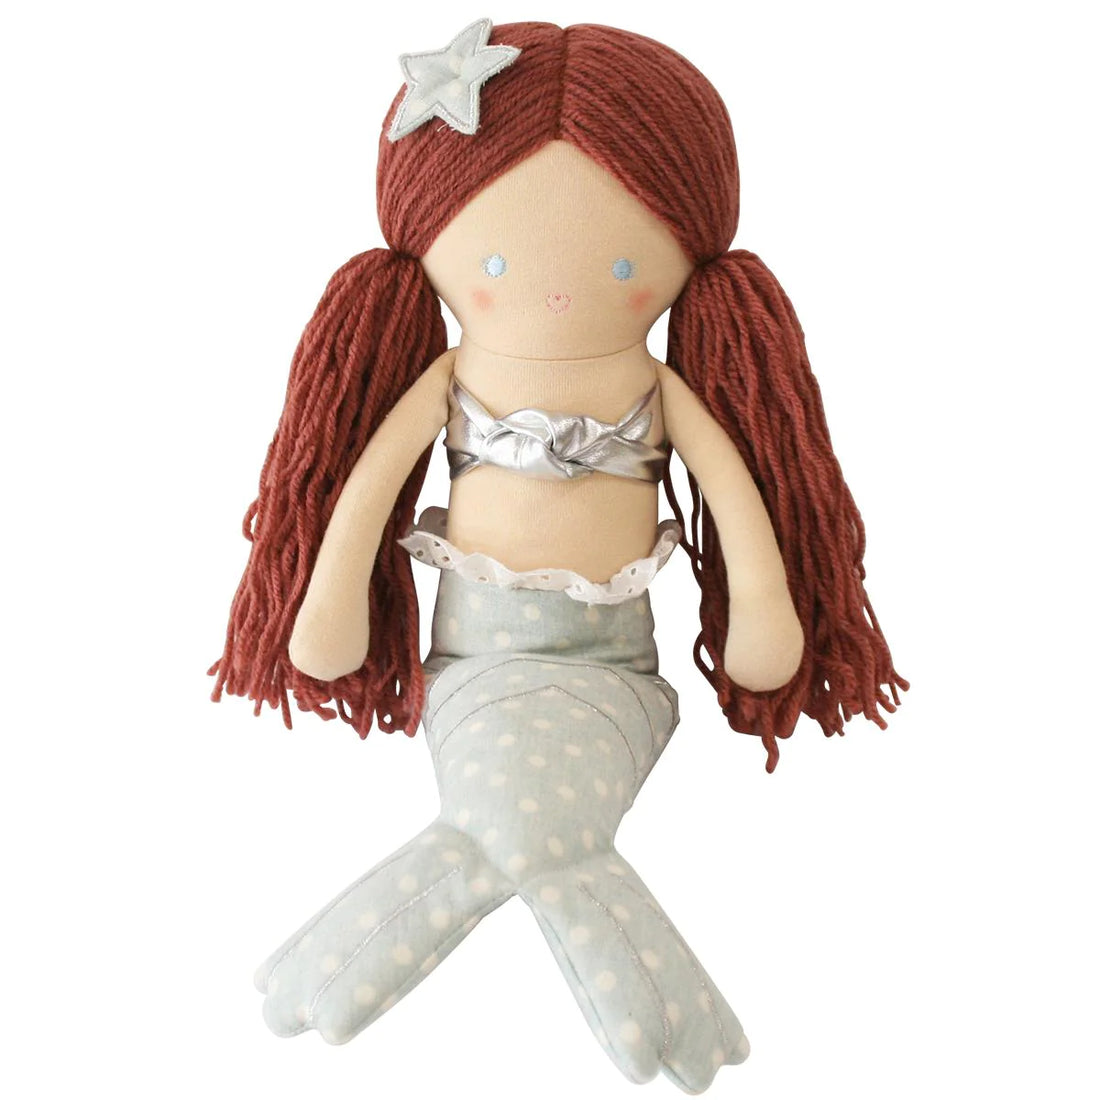 Alimrose Mila Mermaid Doll Red Hair with Aqua tail sitting down